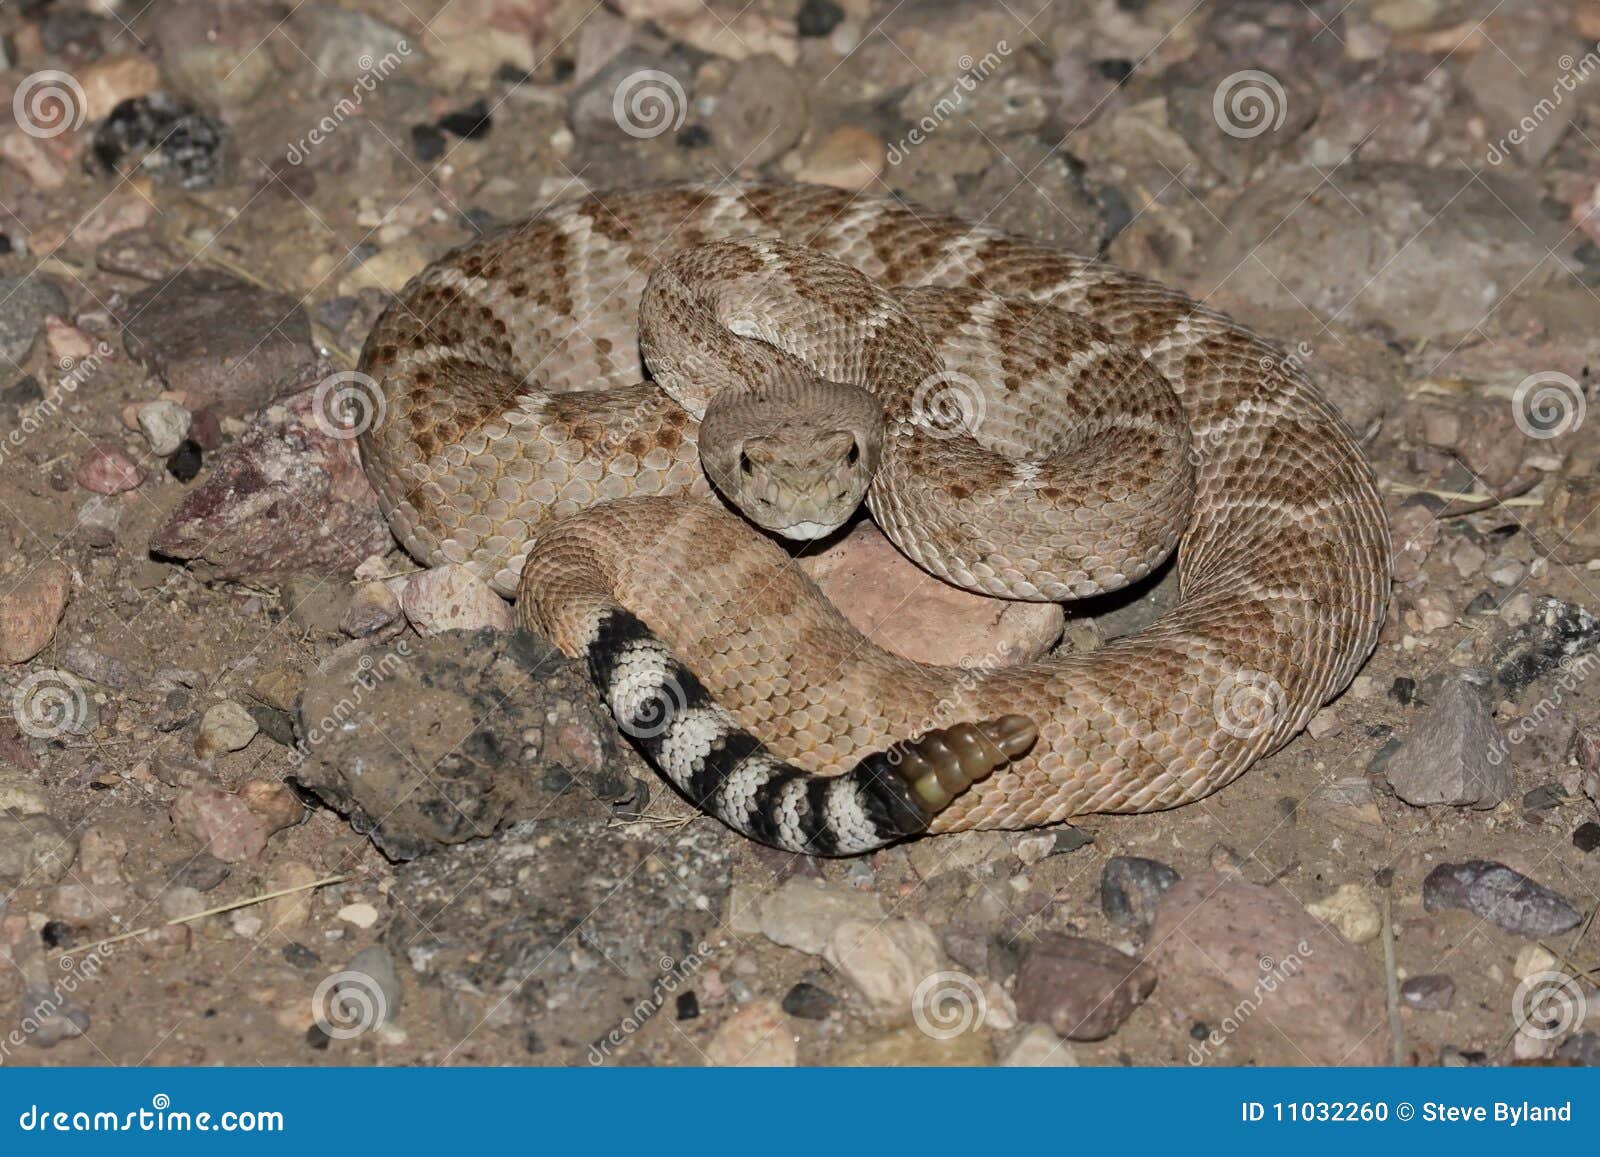 western diamondback rattlesnake (crotalus atrox)